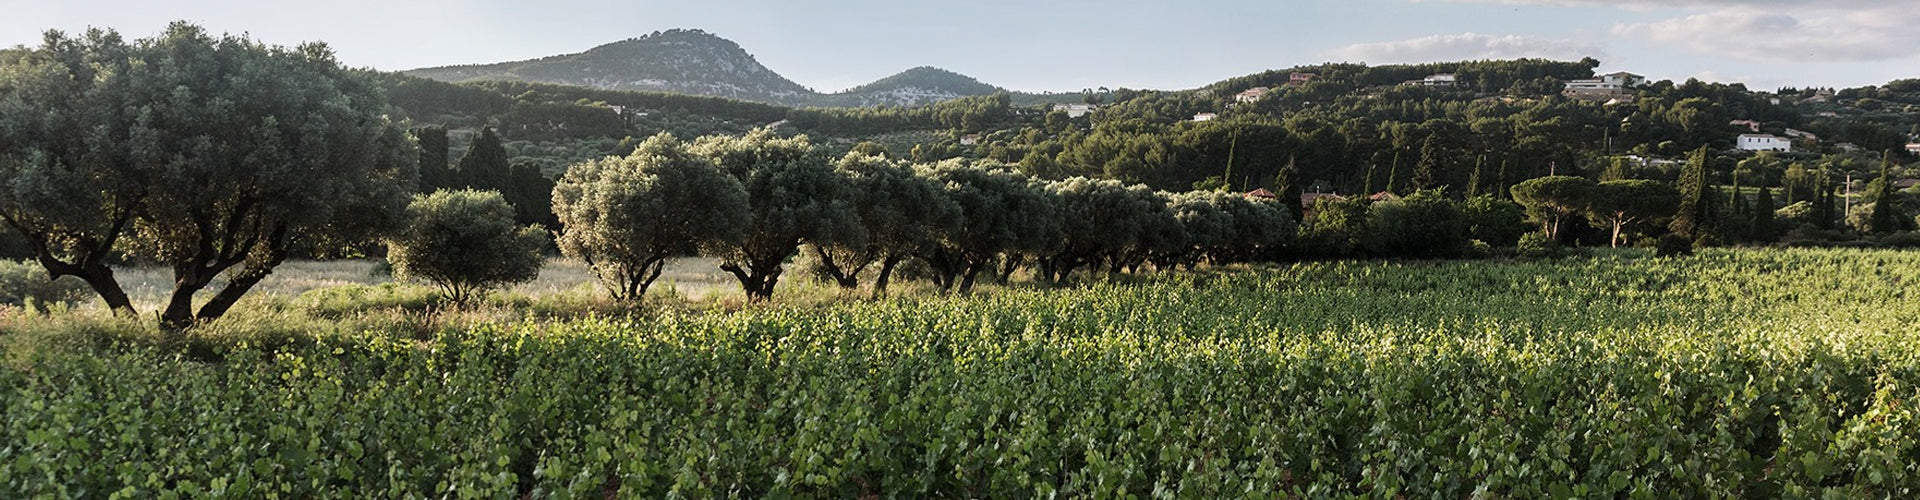 Domaine de Terrebrune Vineyards in Bandol, Provence